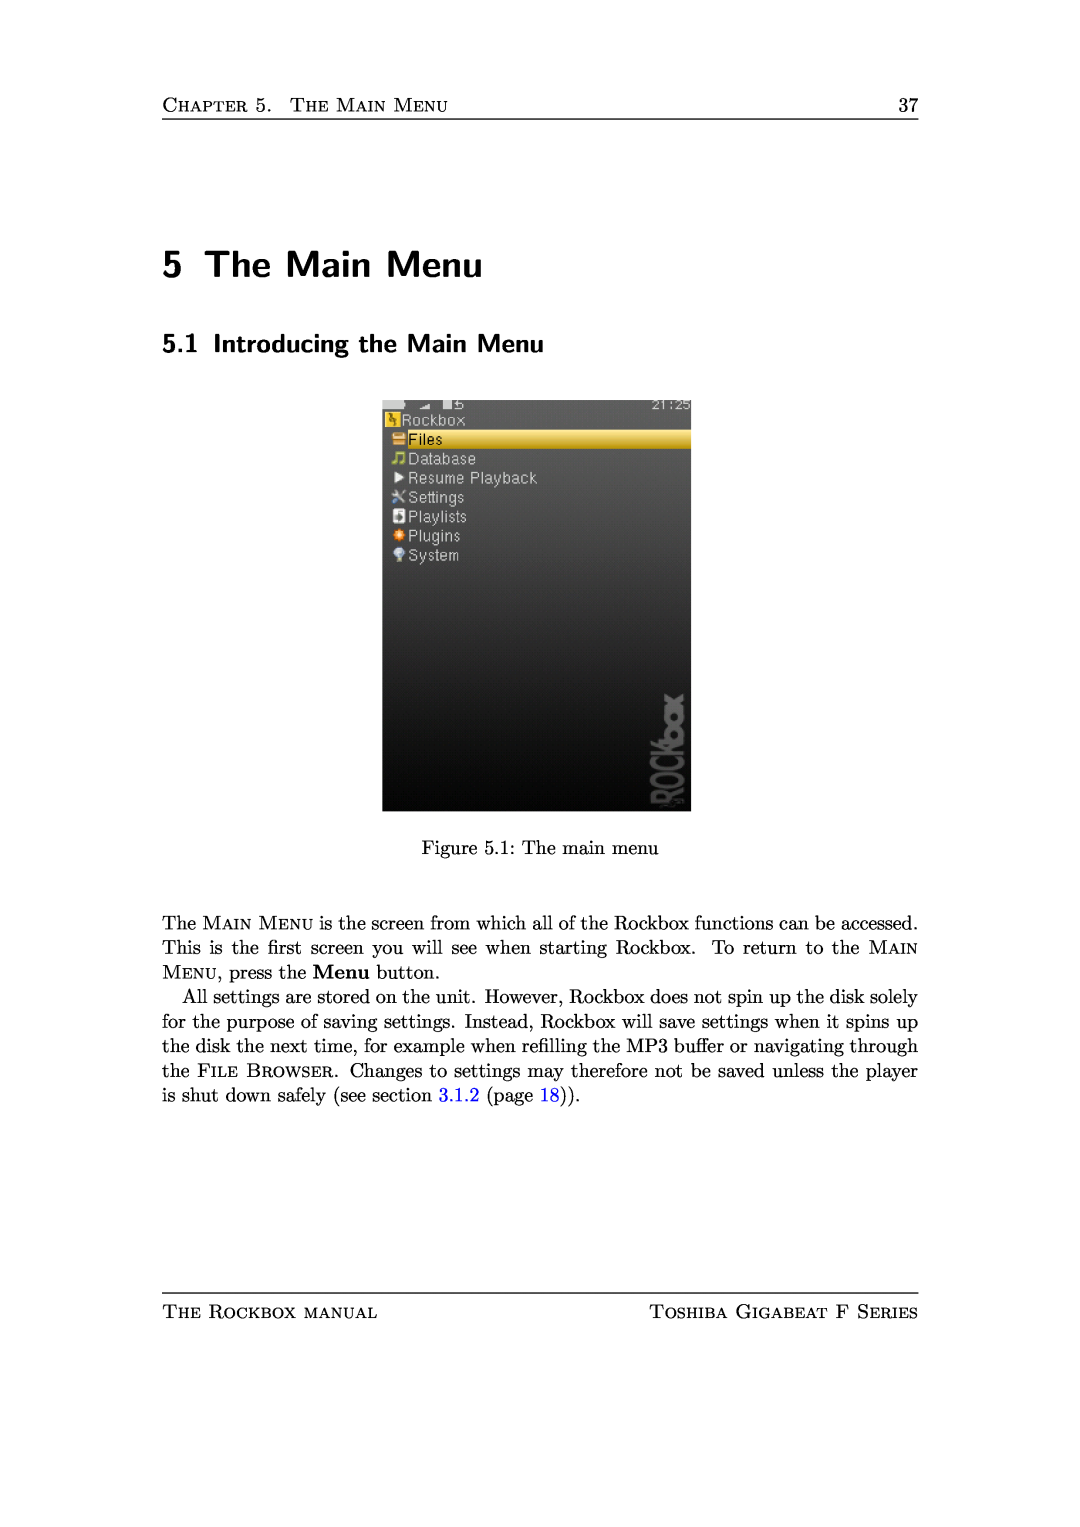 Toshiba F Series manual The Main Menu, Introducing the Main Menu 